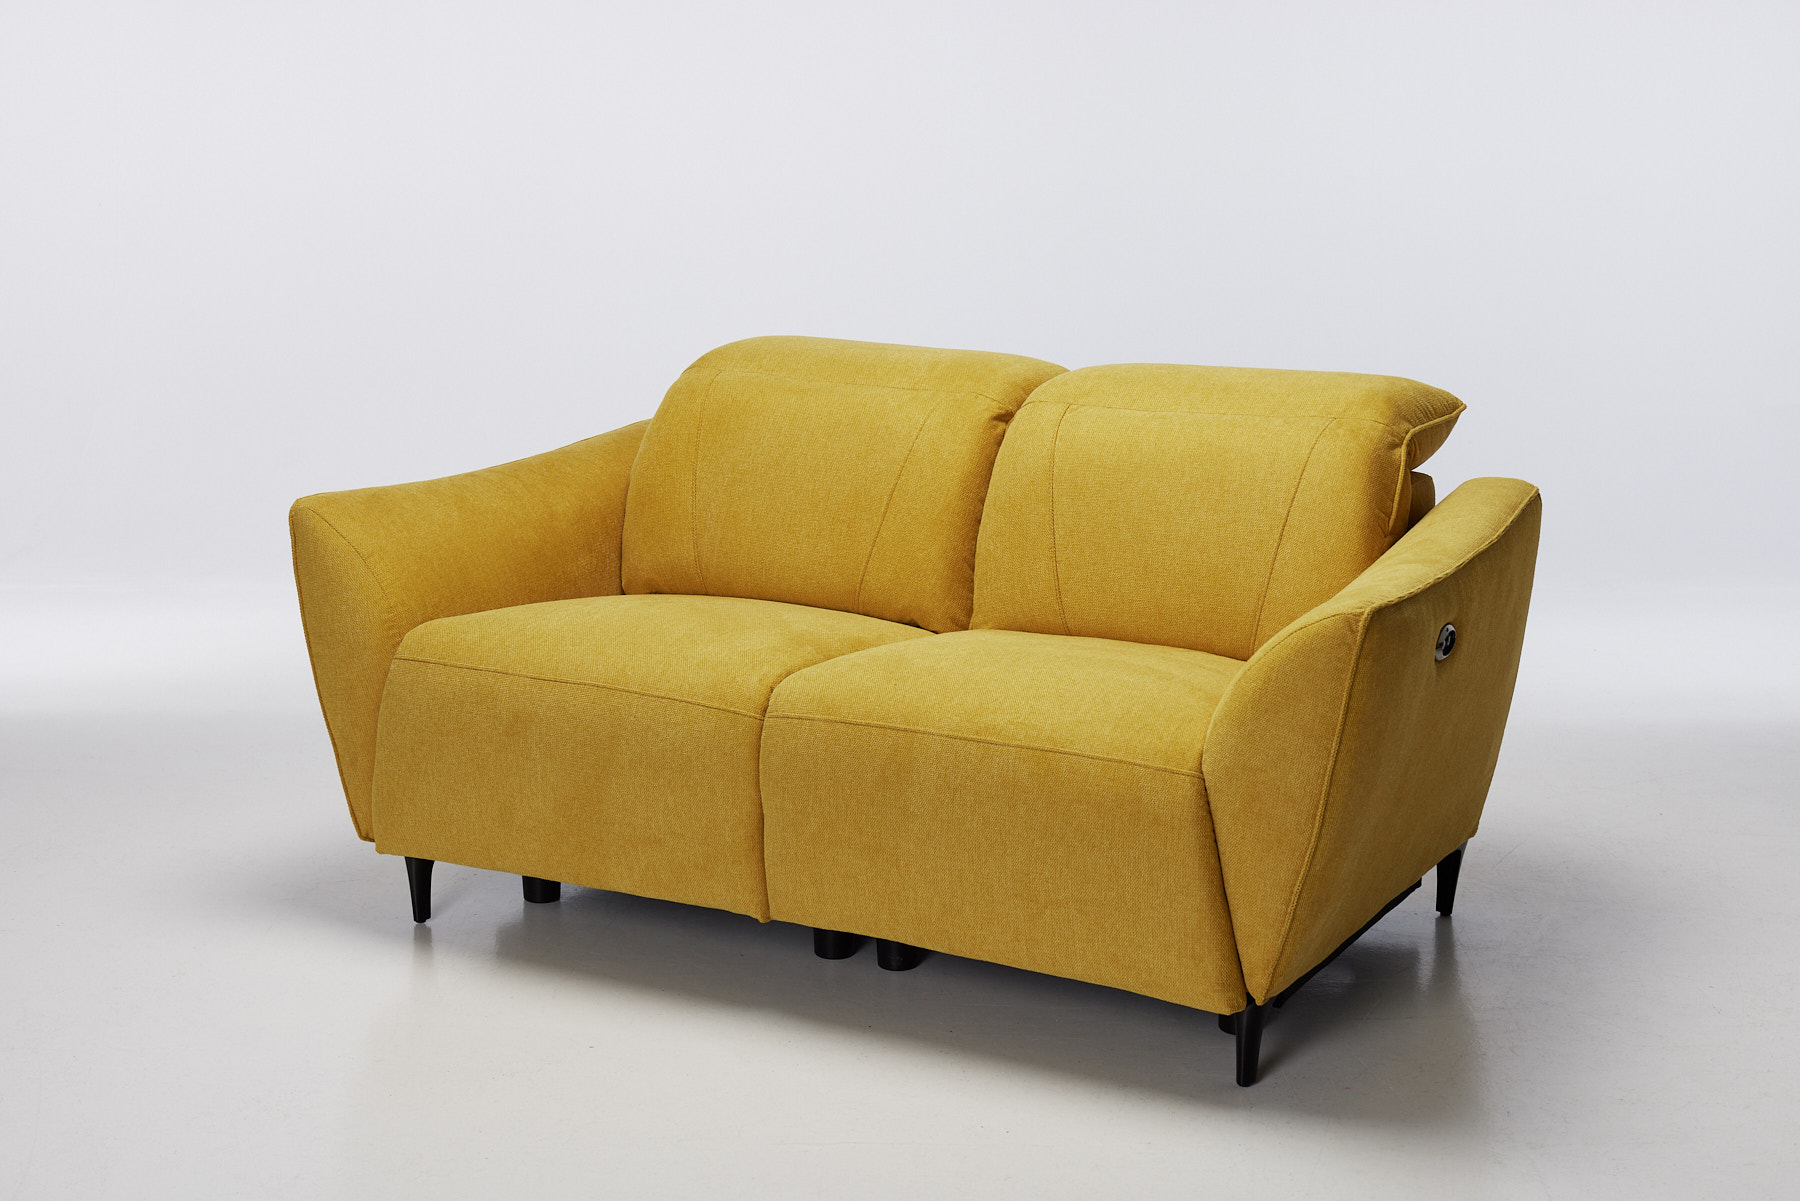 Muse - Electric Recliner 2 Seater Sofa, Ochre Yellow Premium Woven Linen